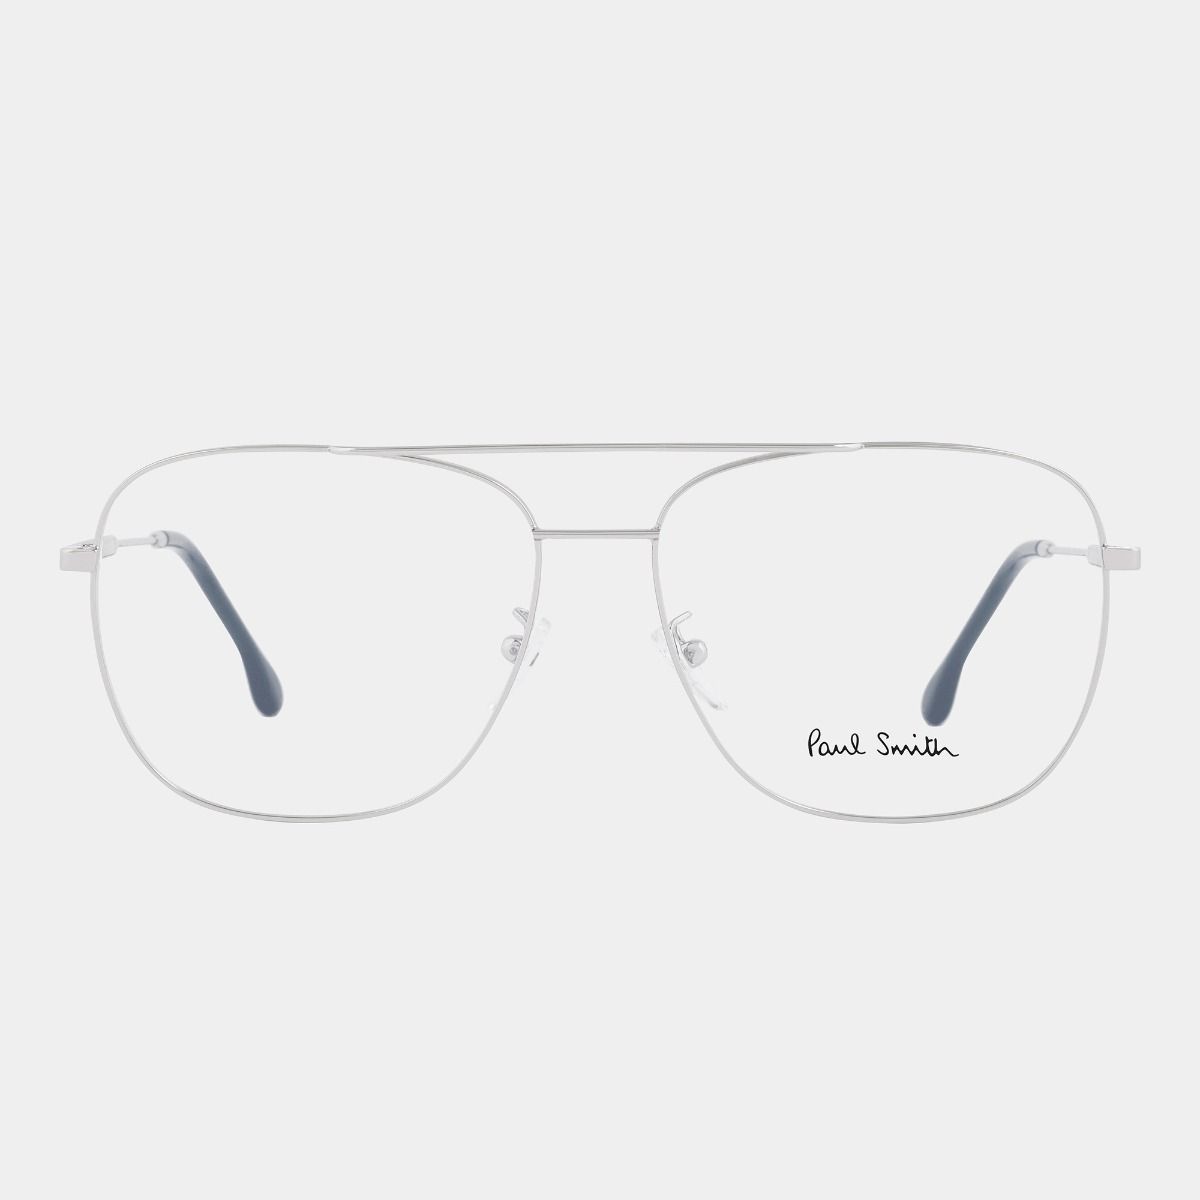 Paul Smith Avery Optical Aviator Glasses (Large)